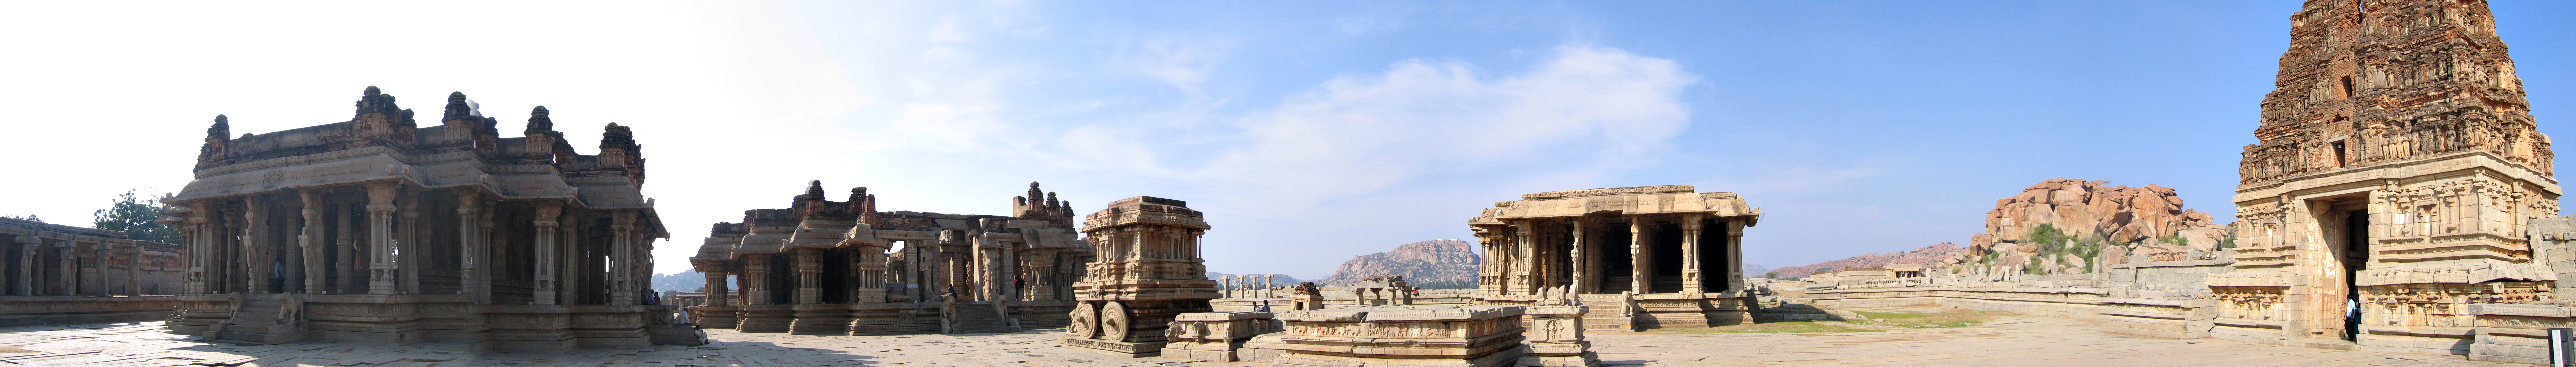 File:Vittahla Temple panorama.jpg - Wikimedia Commons